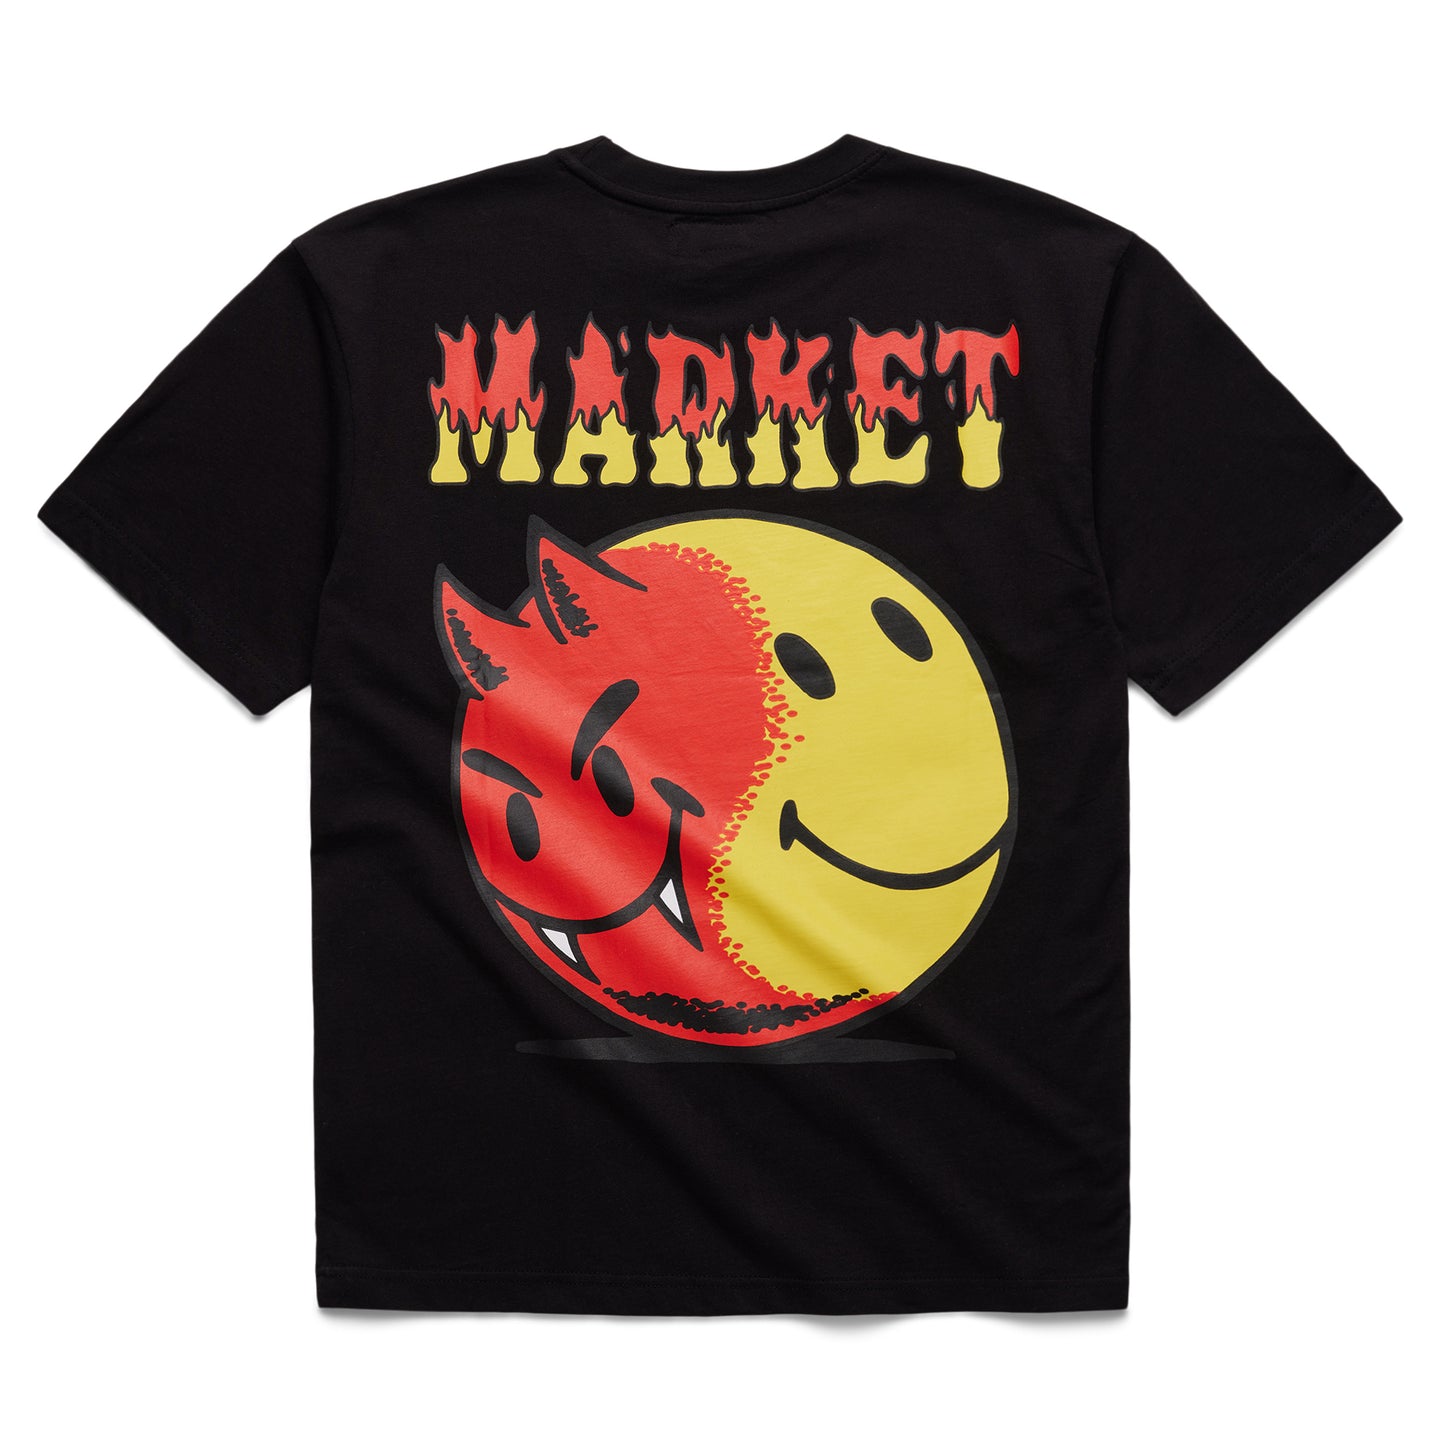 MARKET Good And Evil T-Shirt